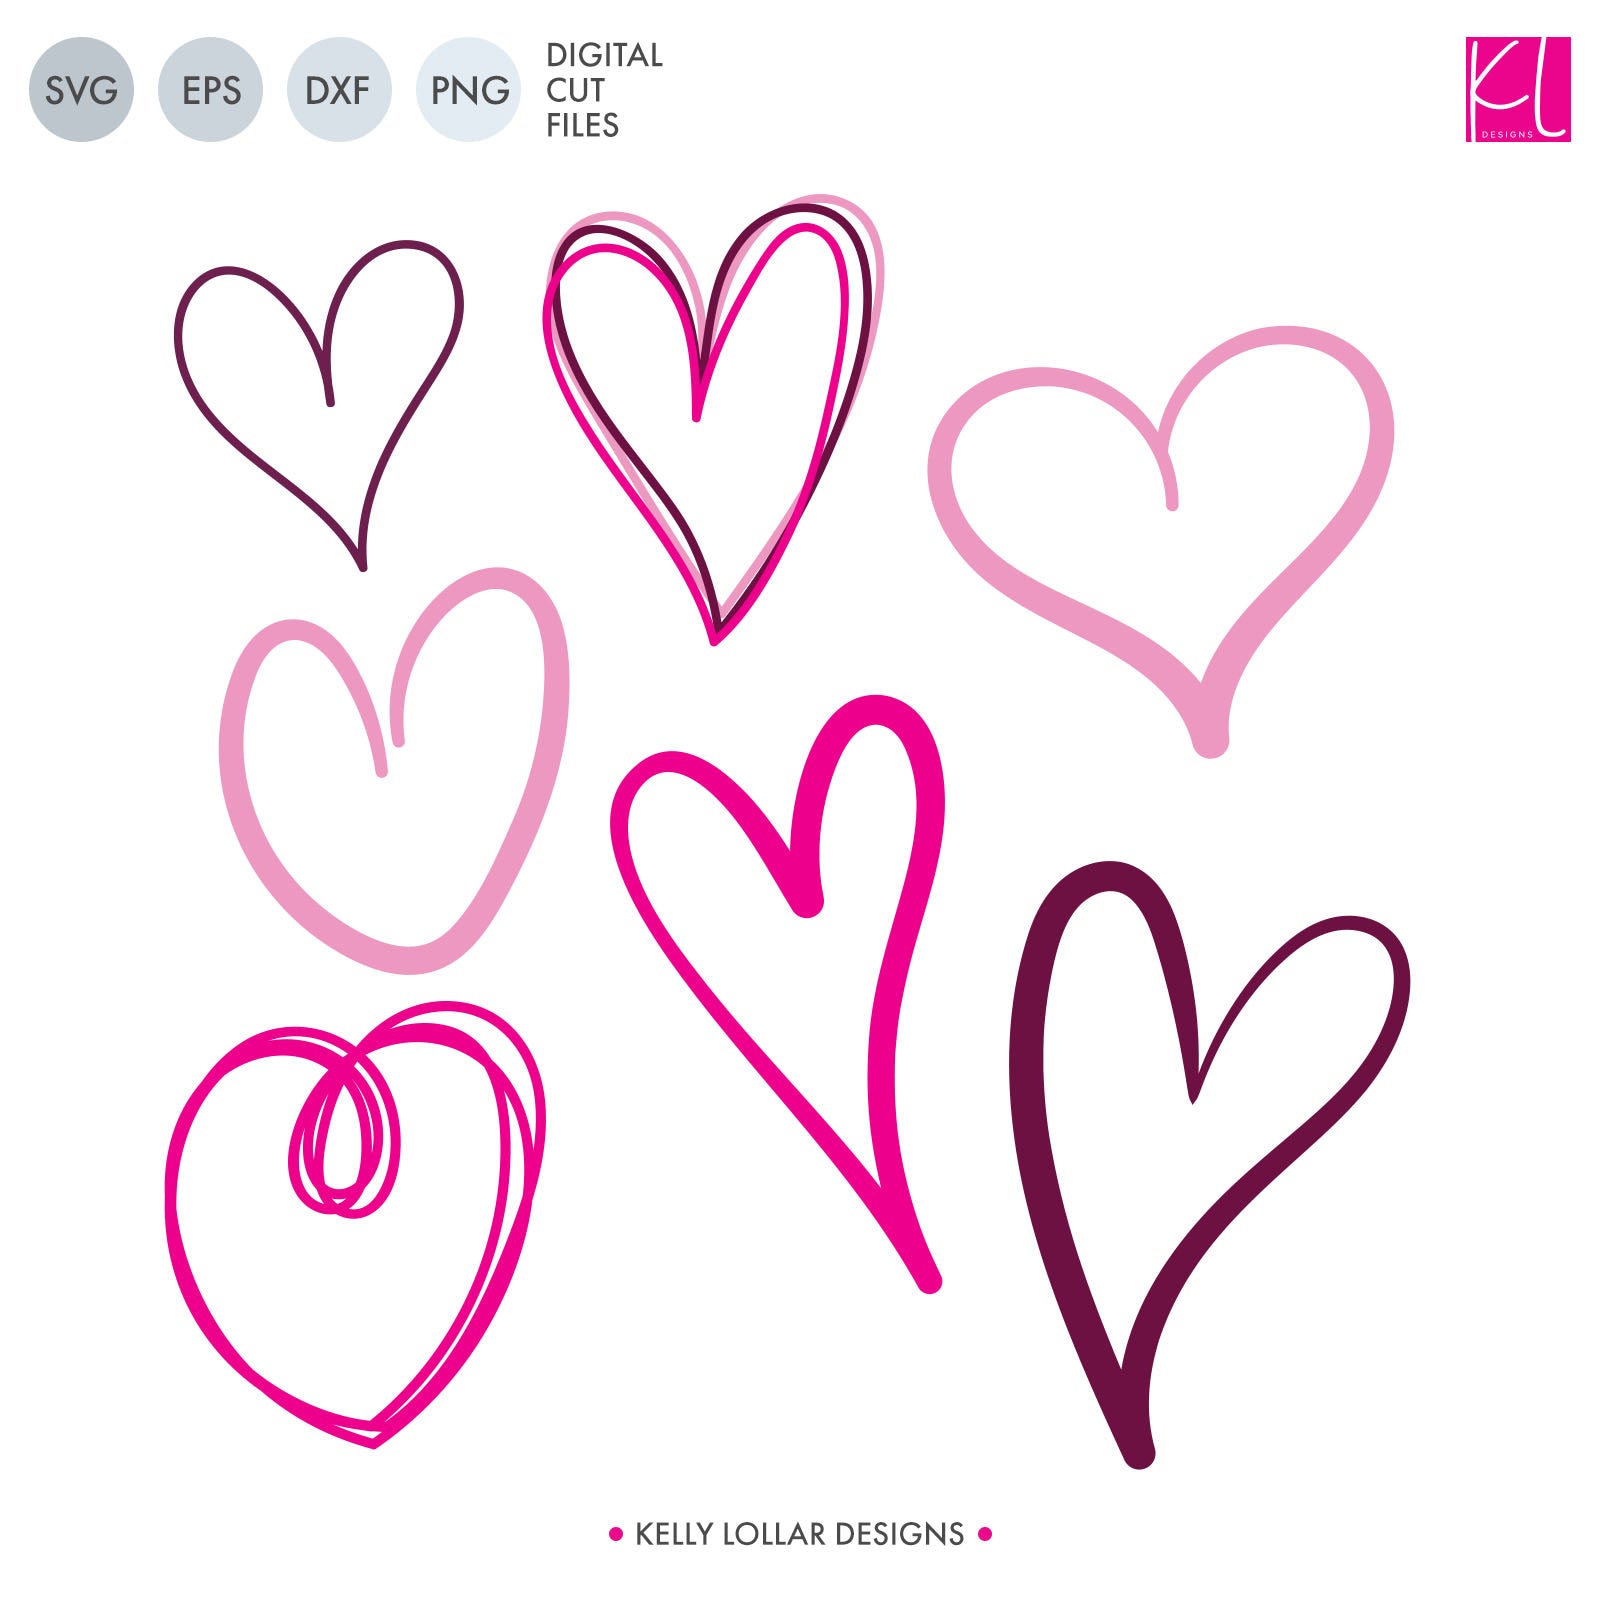 Download Free Doodle Hearts Svg Cut Files Kelly Lollar Designs SVG, PNG, EPS, DXF File